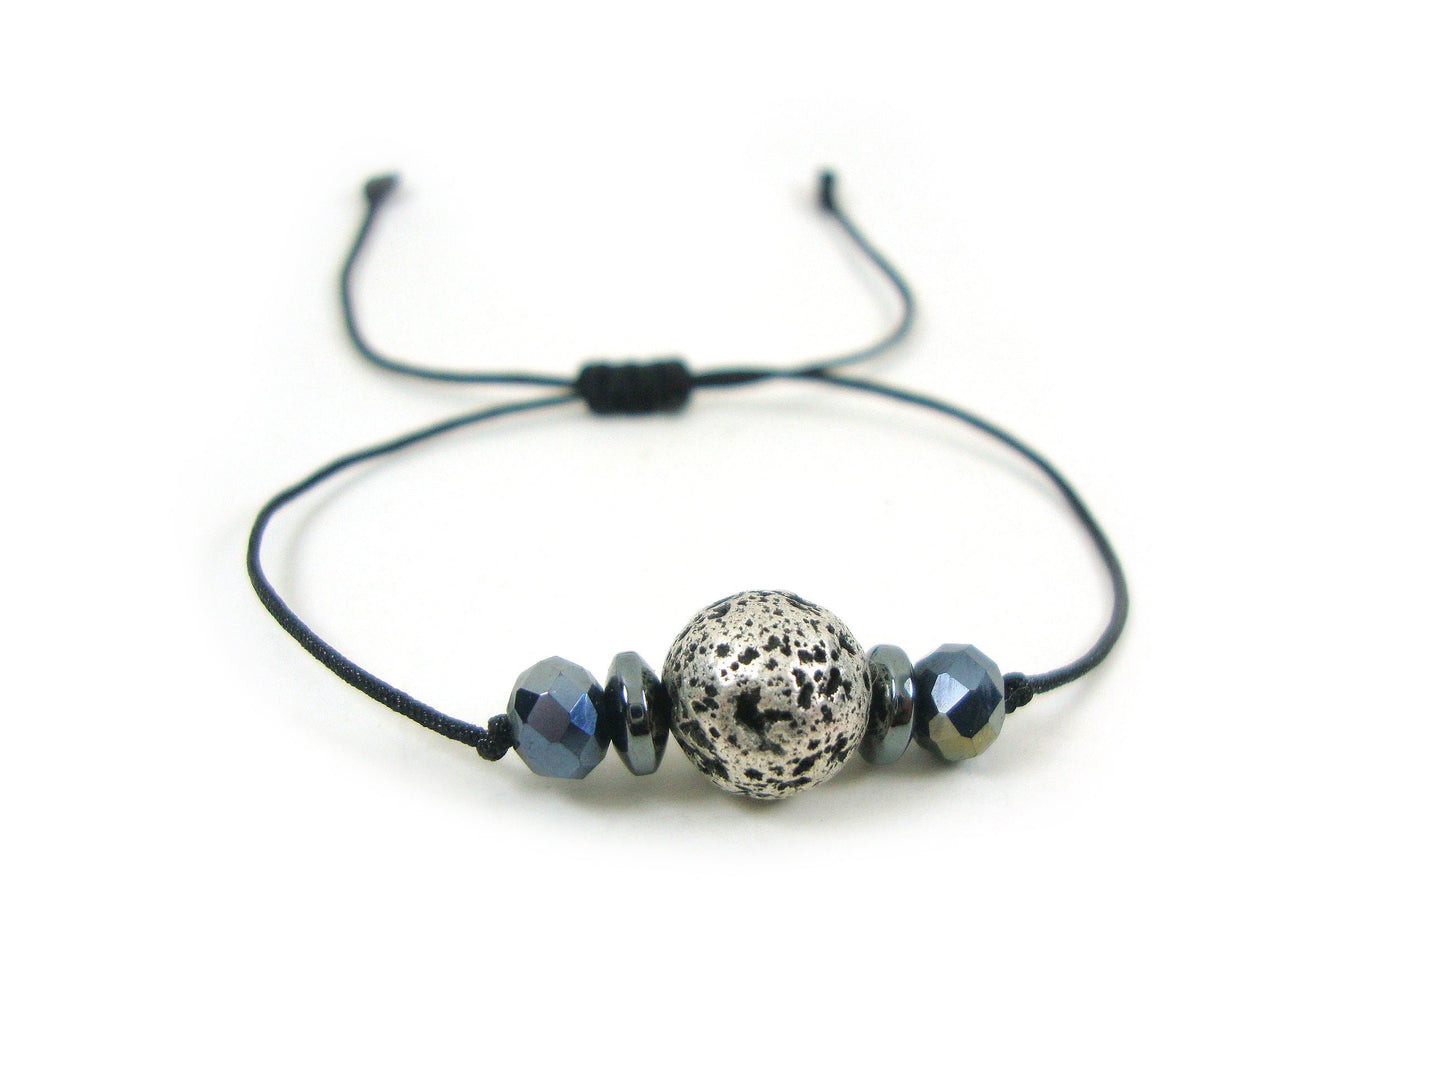 Volcanic Silver Color Lava & Crystal Stones Adjustable Bracelet, Men Women Unisex Bracelet, Meditation Relaxing Greek Lava Bracelet Gift